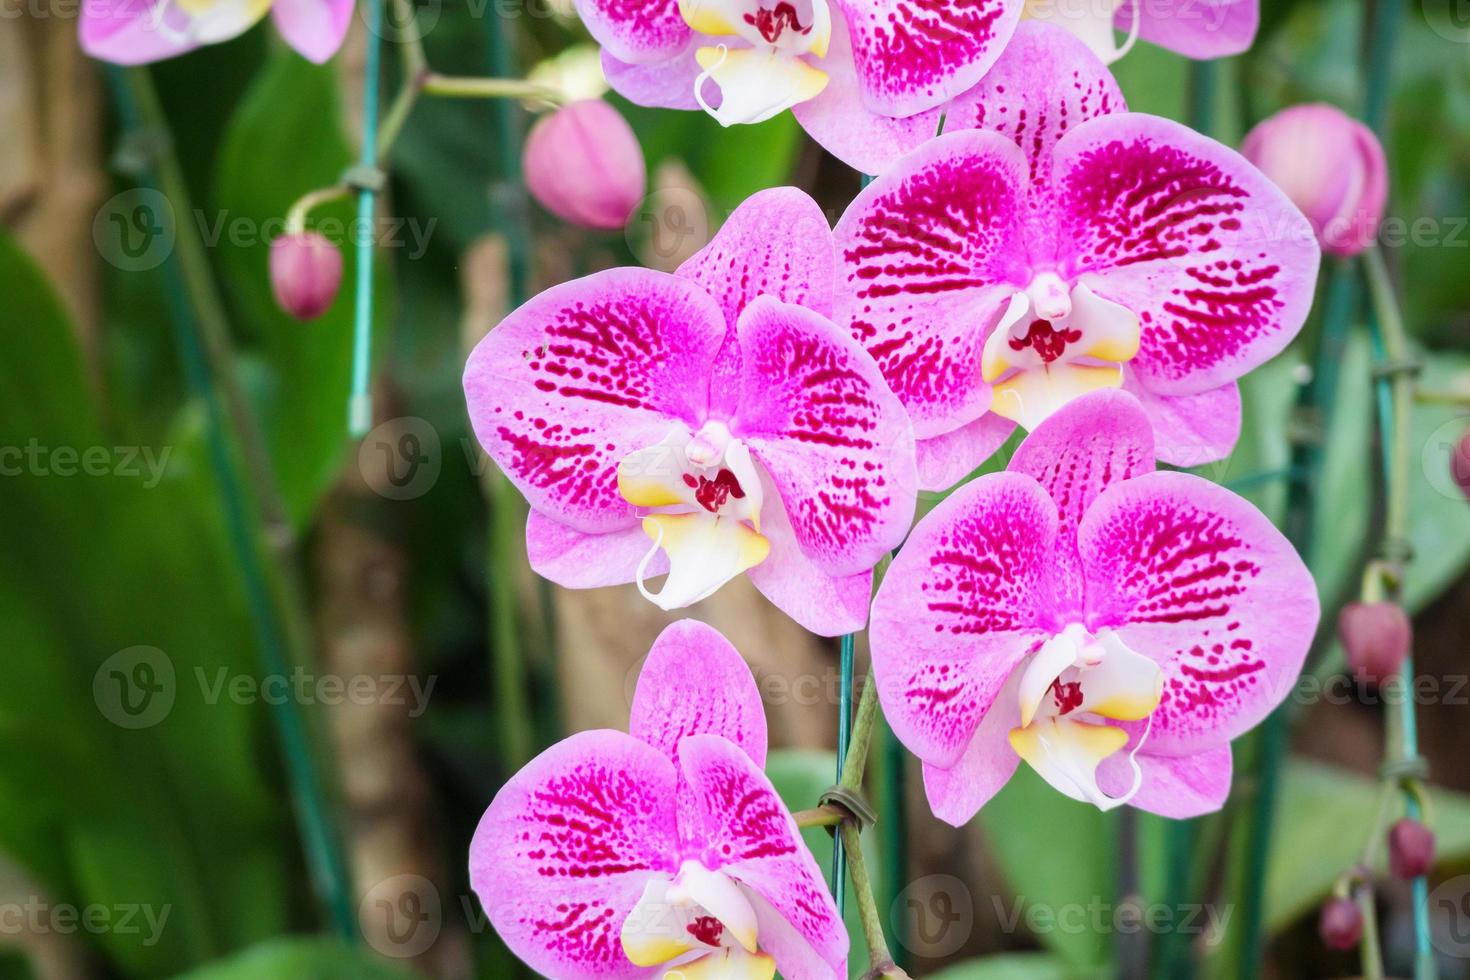 skön phalaenopsis orkide blomma blomning i trädgård blommig bakgrund foto